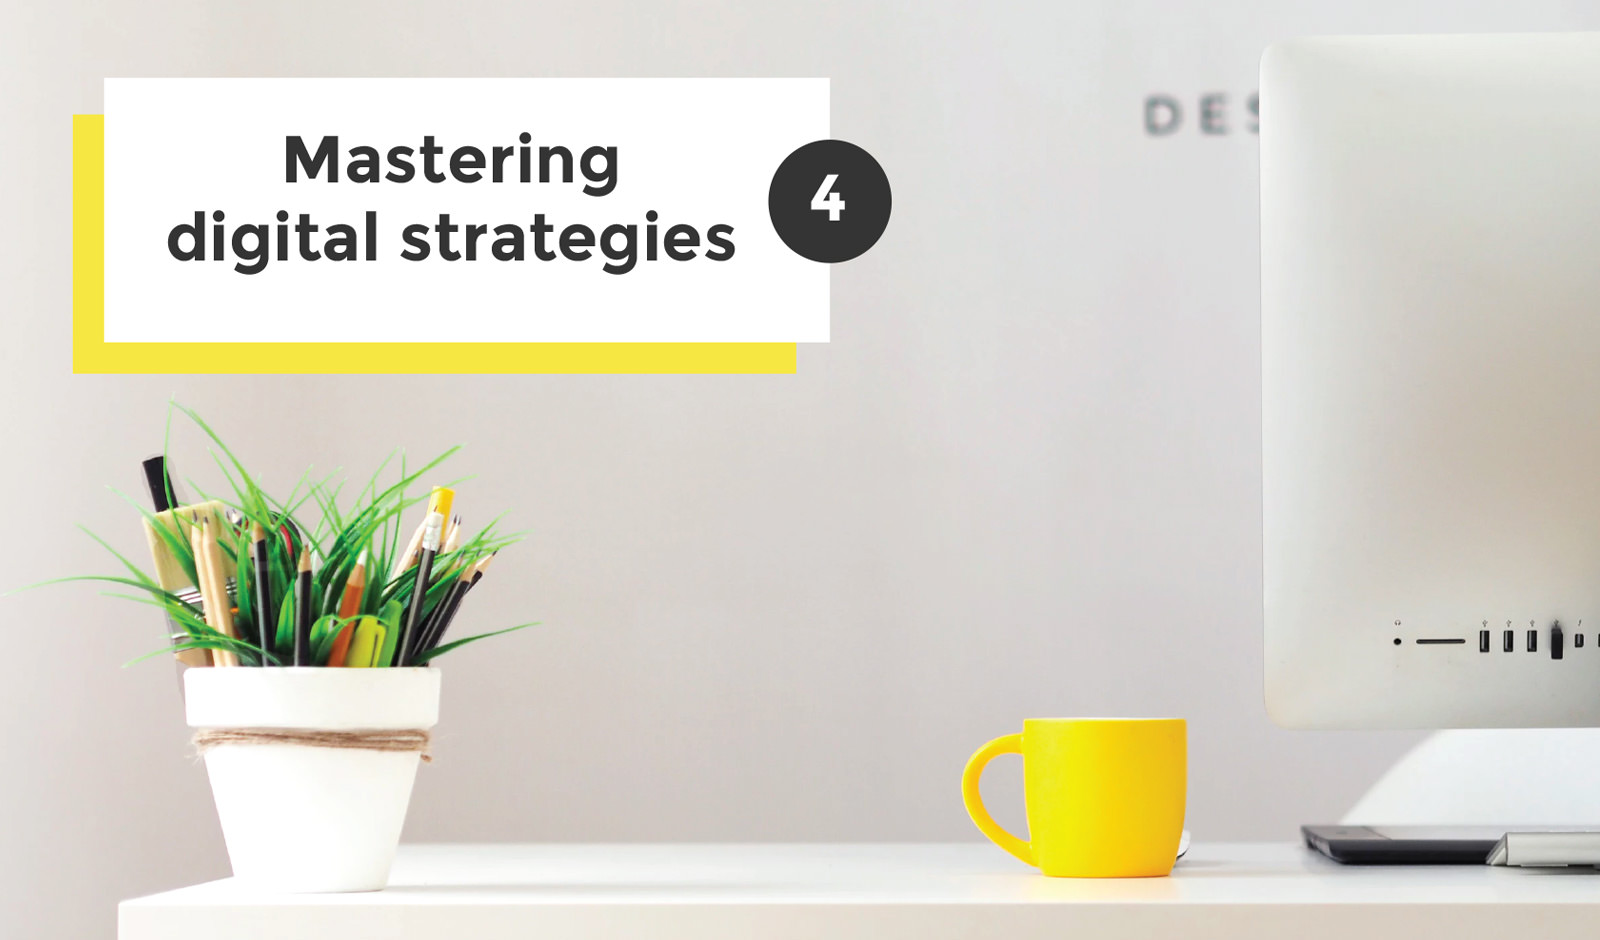 Lemon Tree Marketing Blog Image for Mastering Digital Strategies